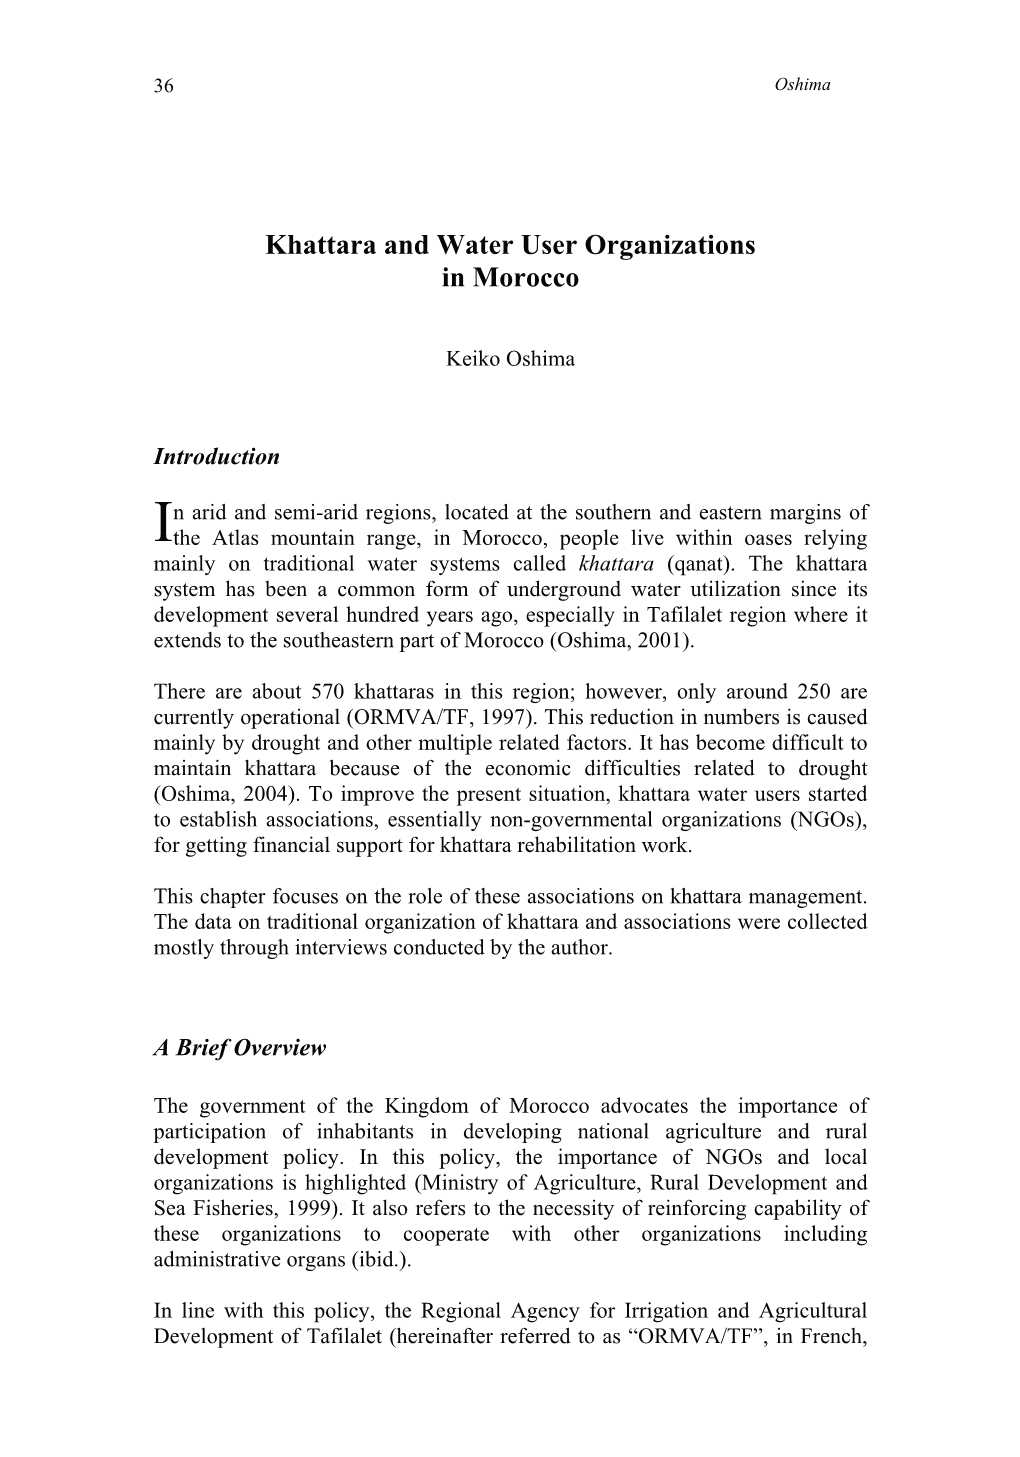 Khattara and Water User Organizations in Morocco